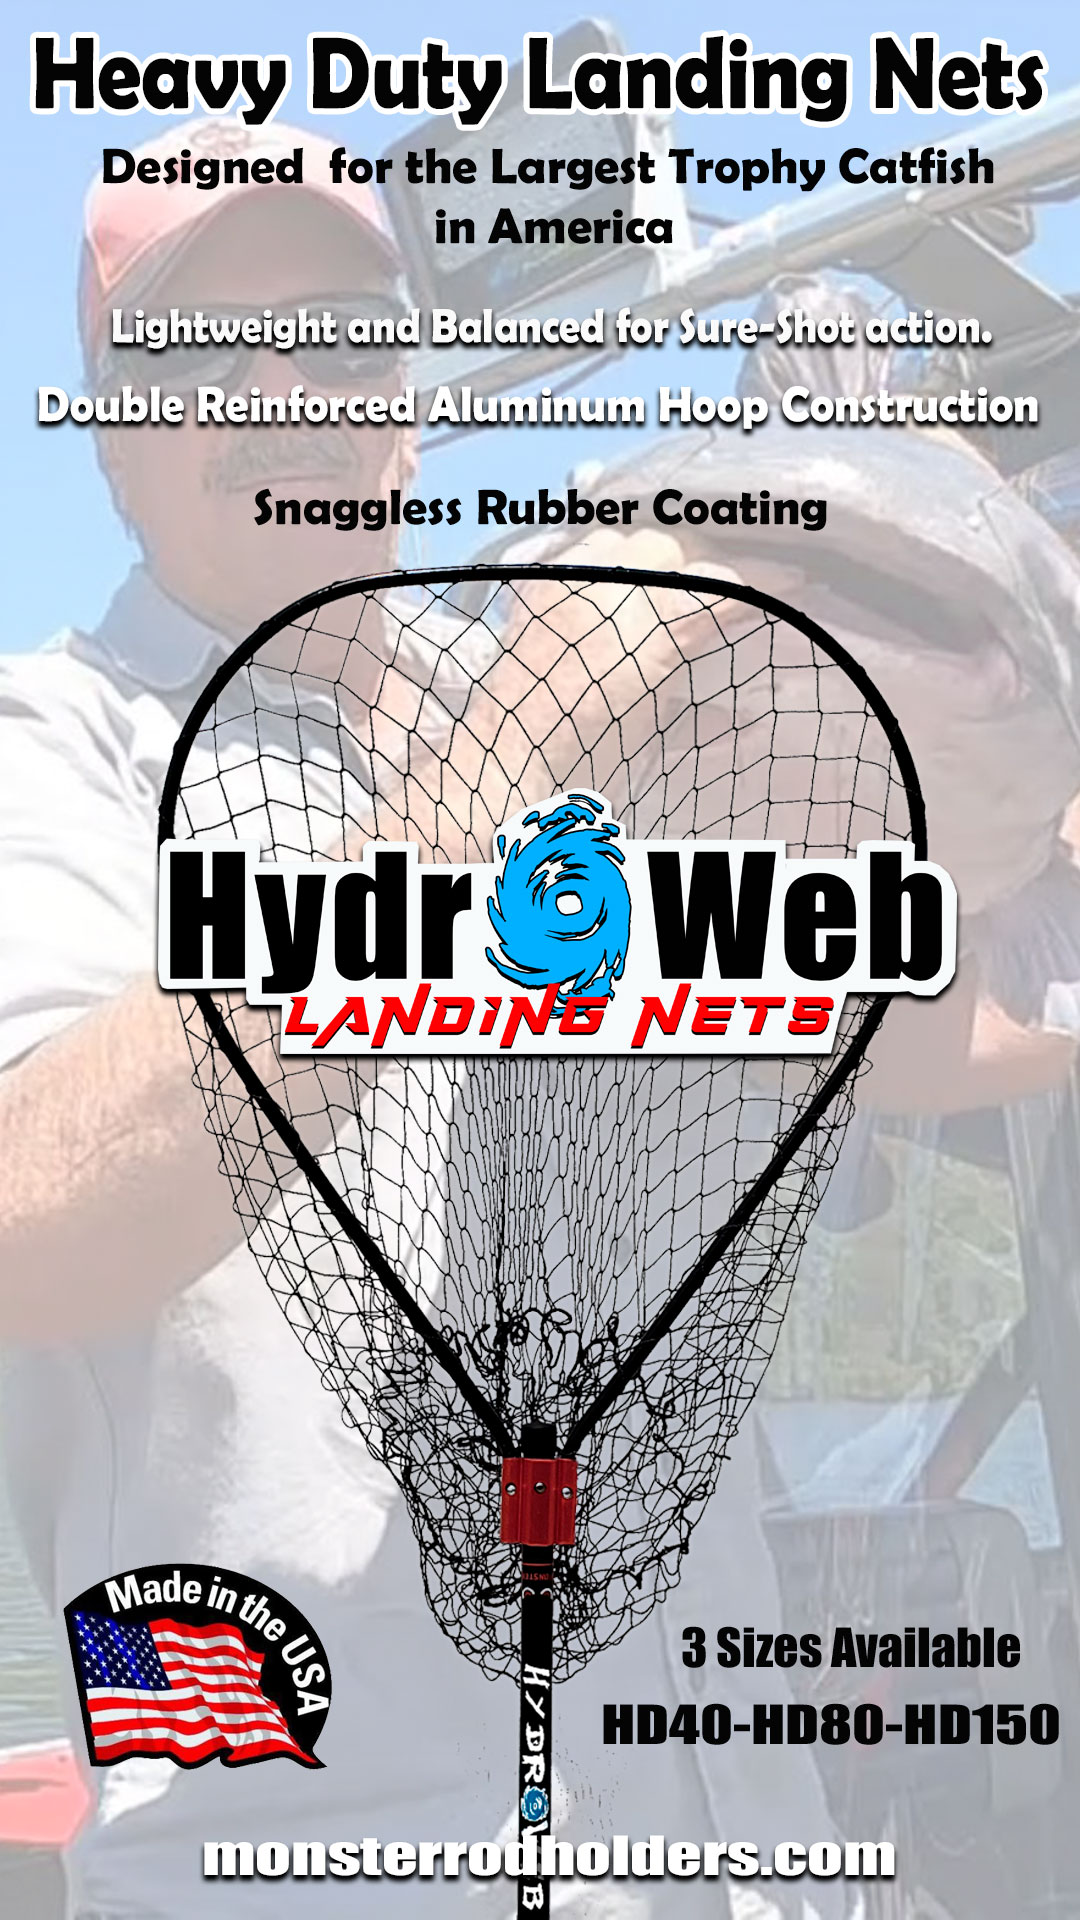 HydroWeb Landing Nets